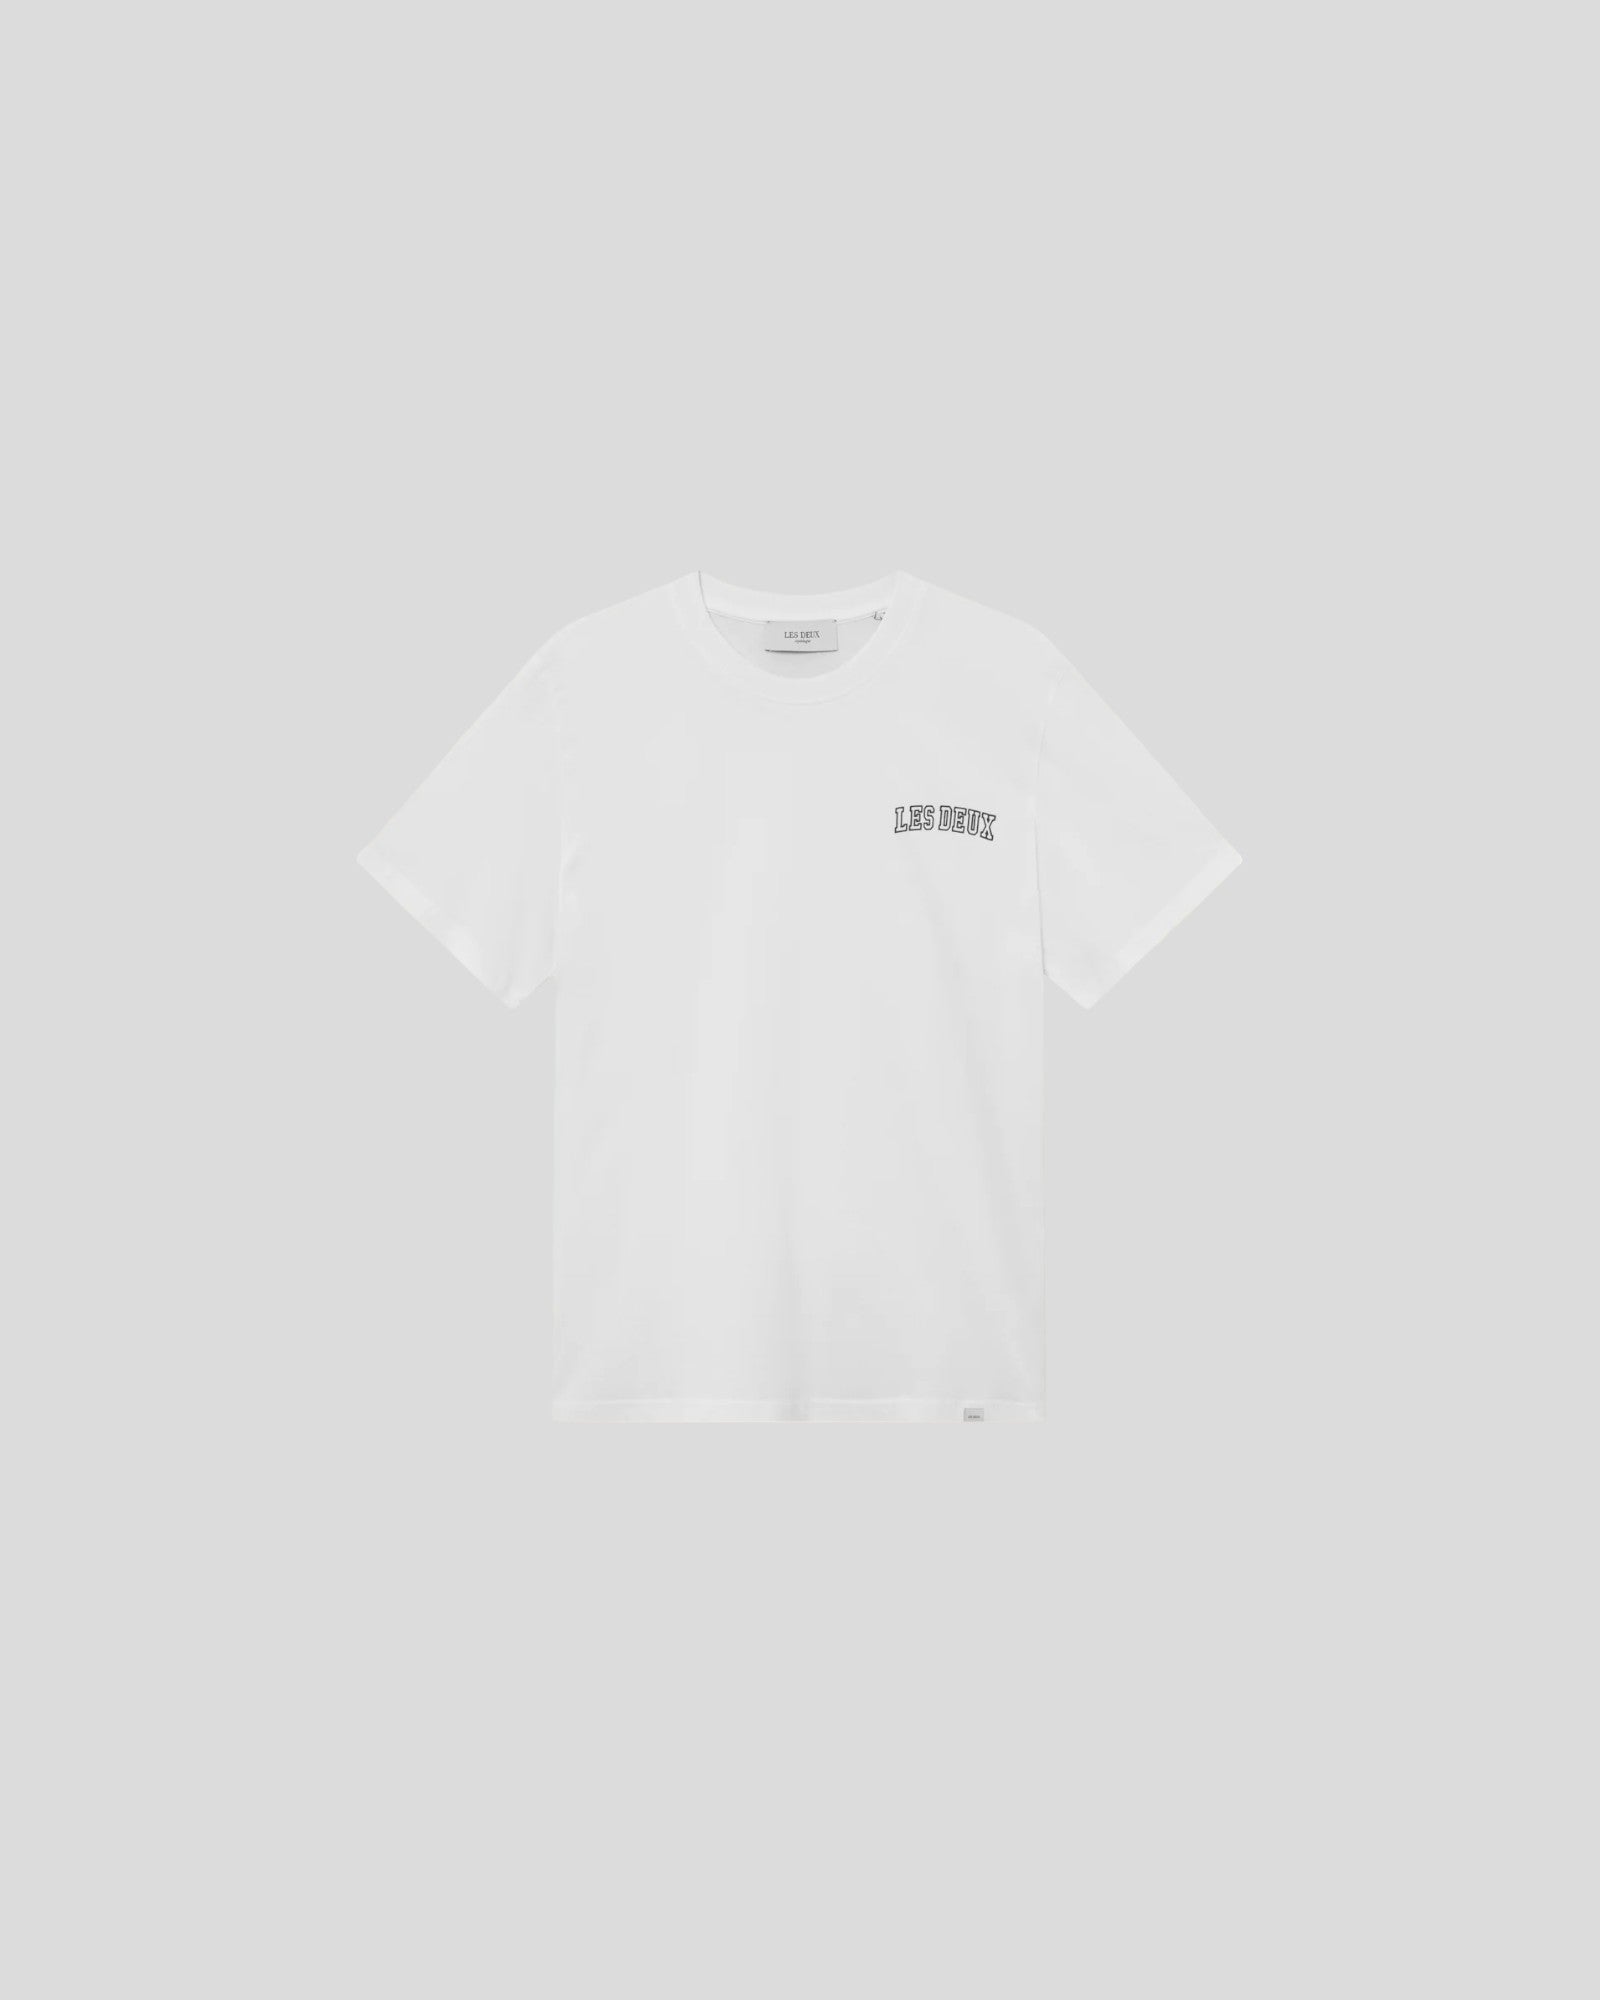 Les Deux || Blake T-Shirt - White / Black